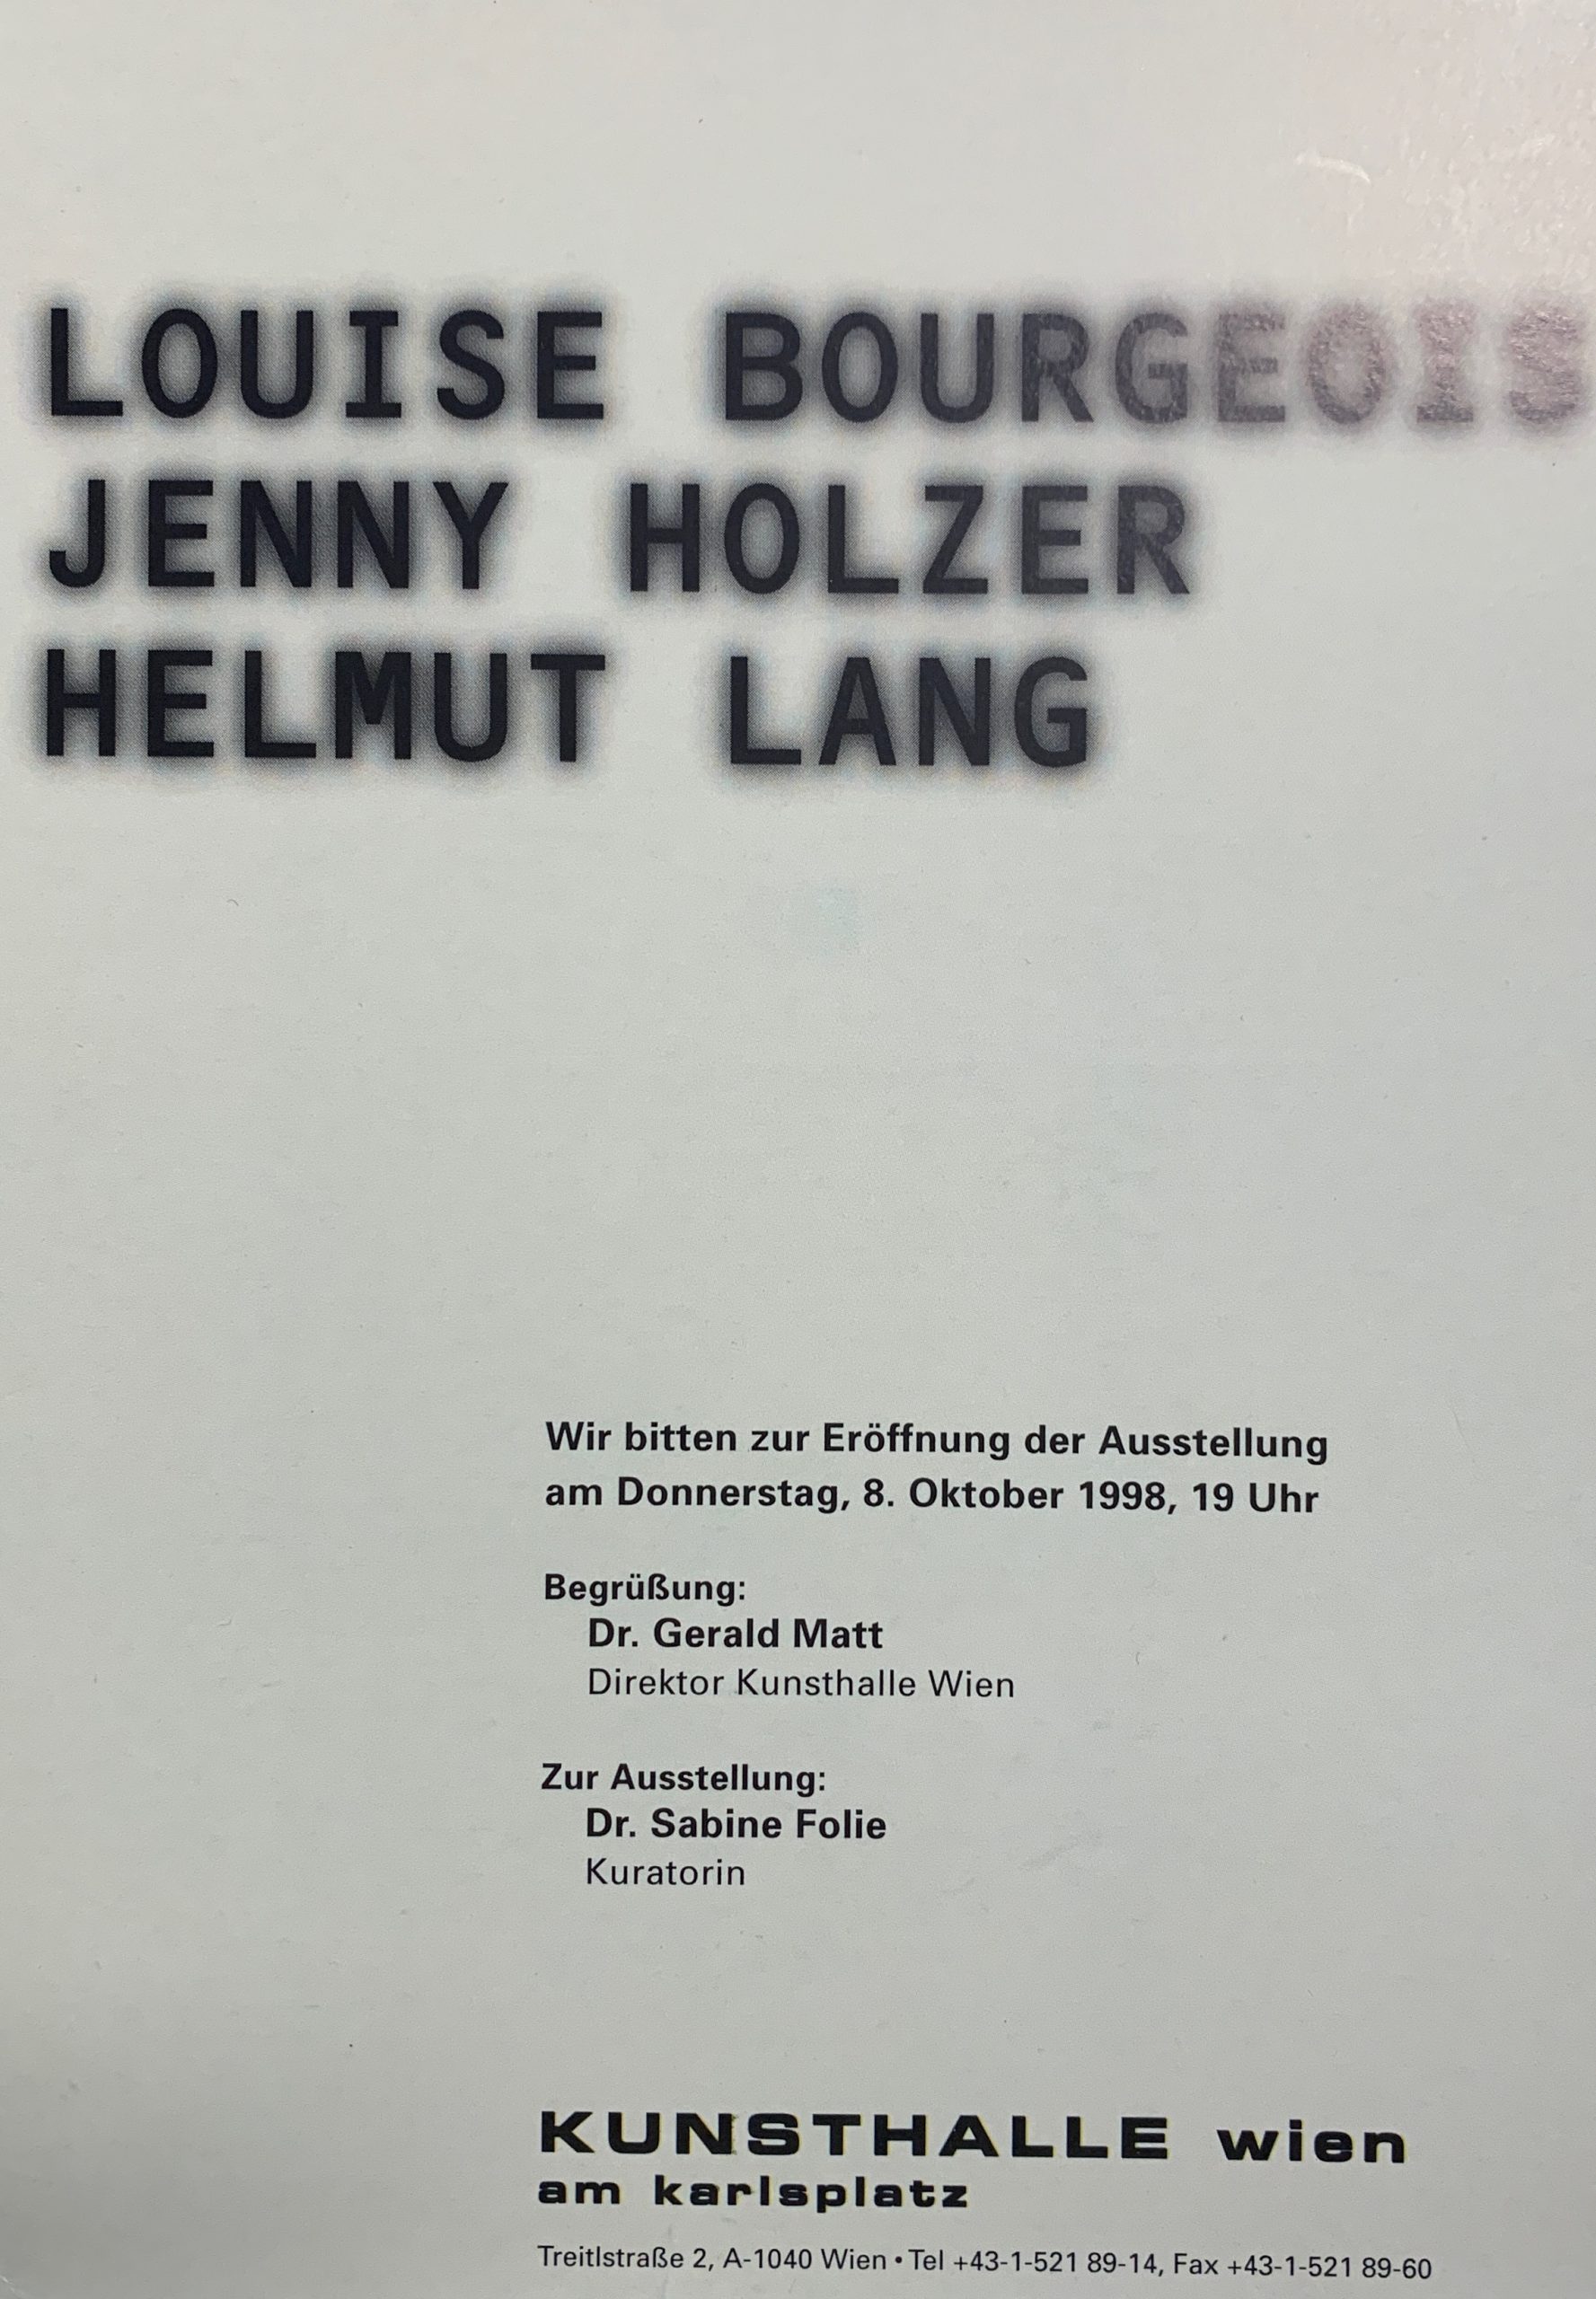 Jenny Holzer/Helmut Lang newspaper—2000 (from 